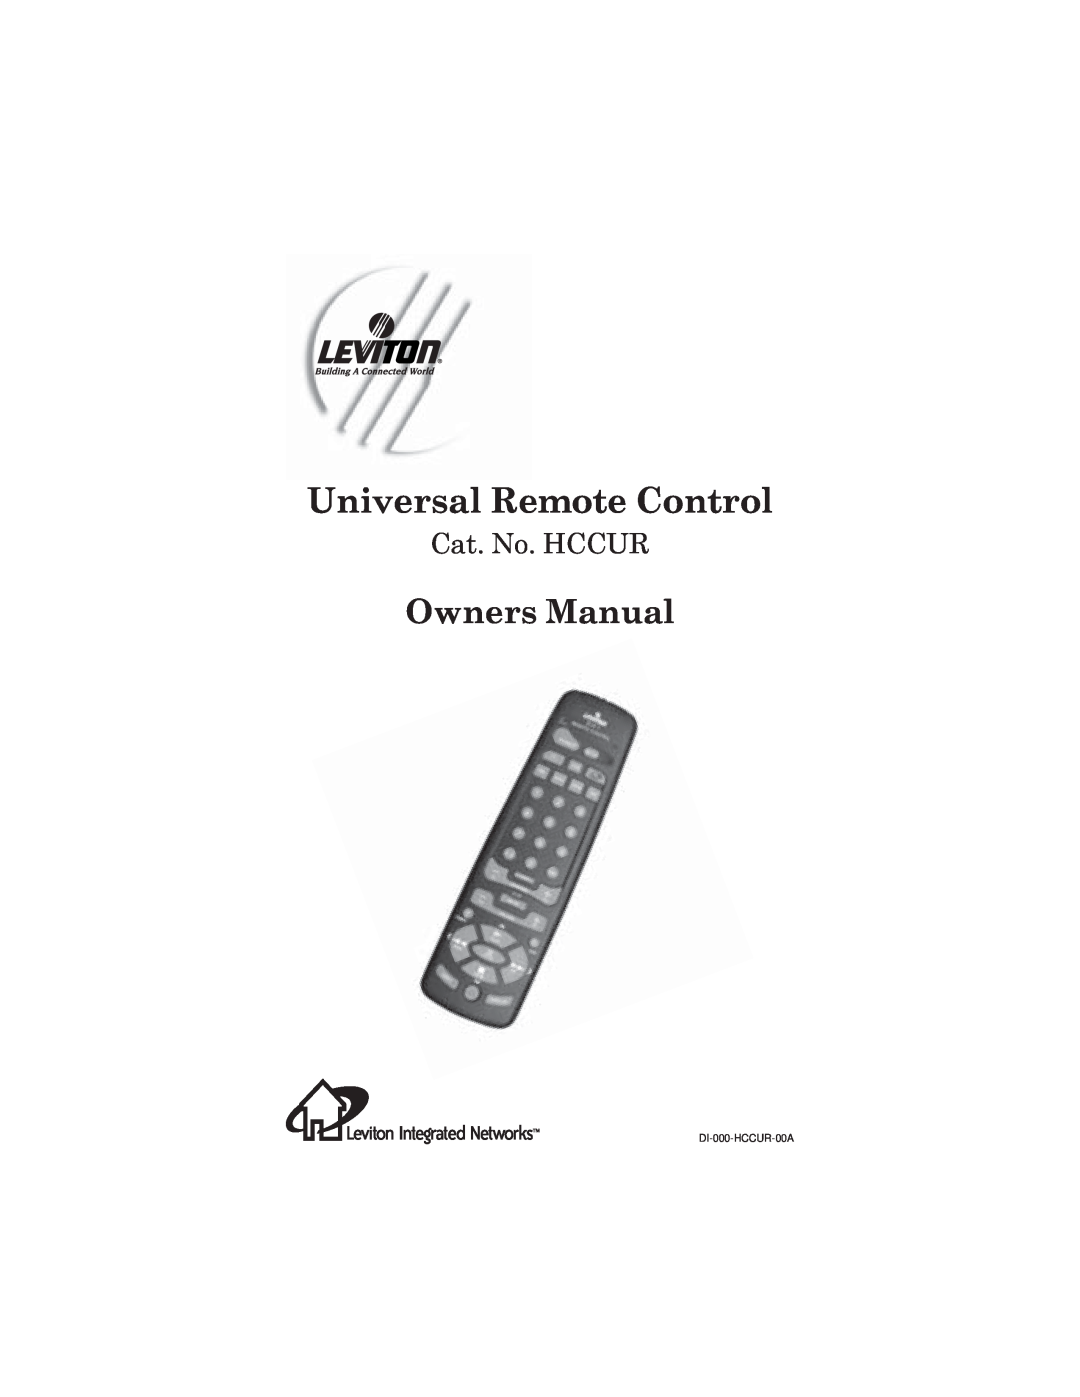 Universal Remote Control Remote control HCCUR owner manual Universal Remote Control, Owners Manual, Cat. No. HCCUR 